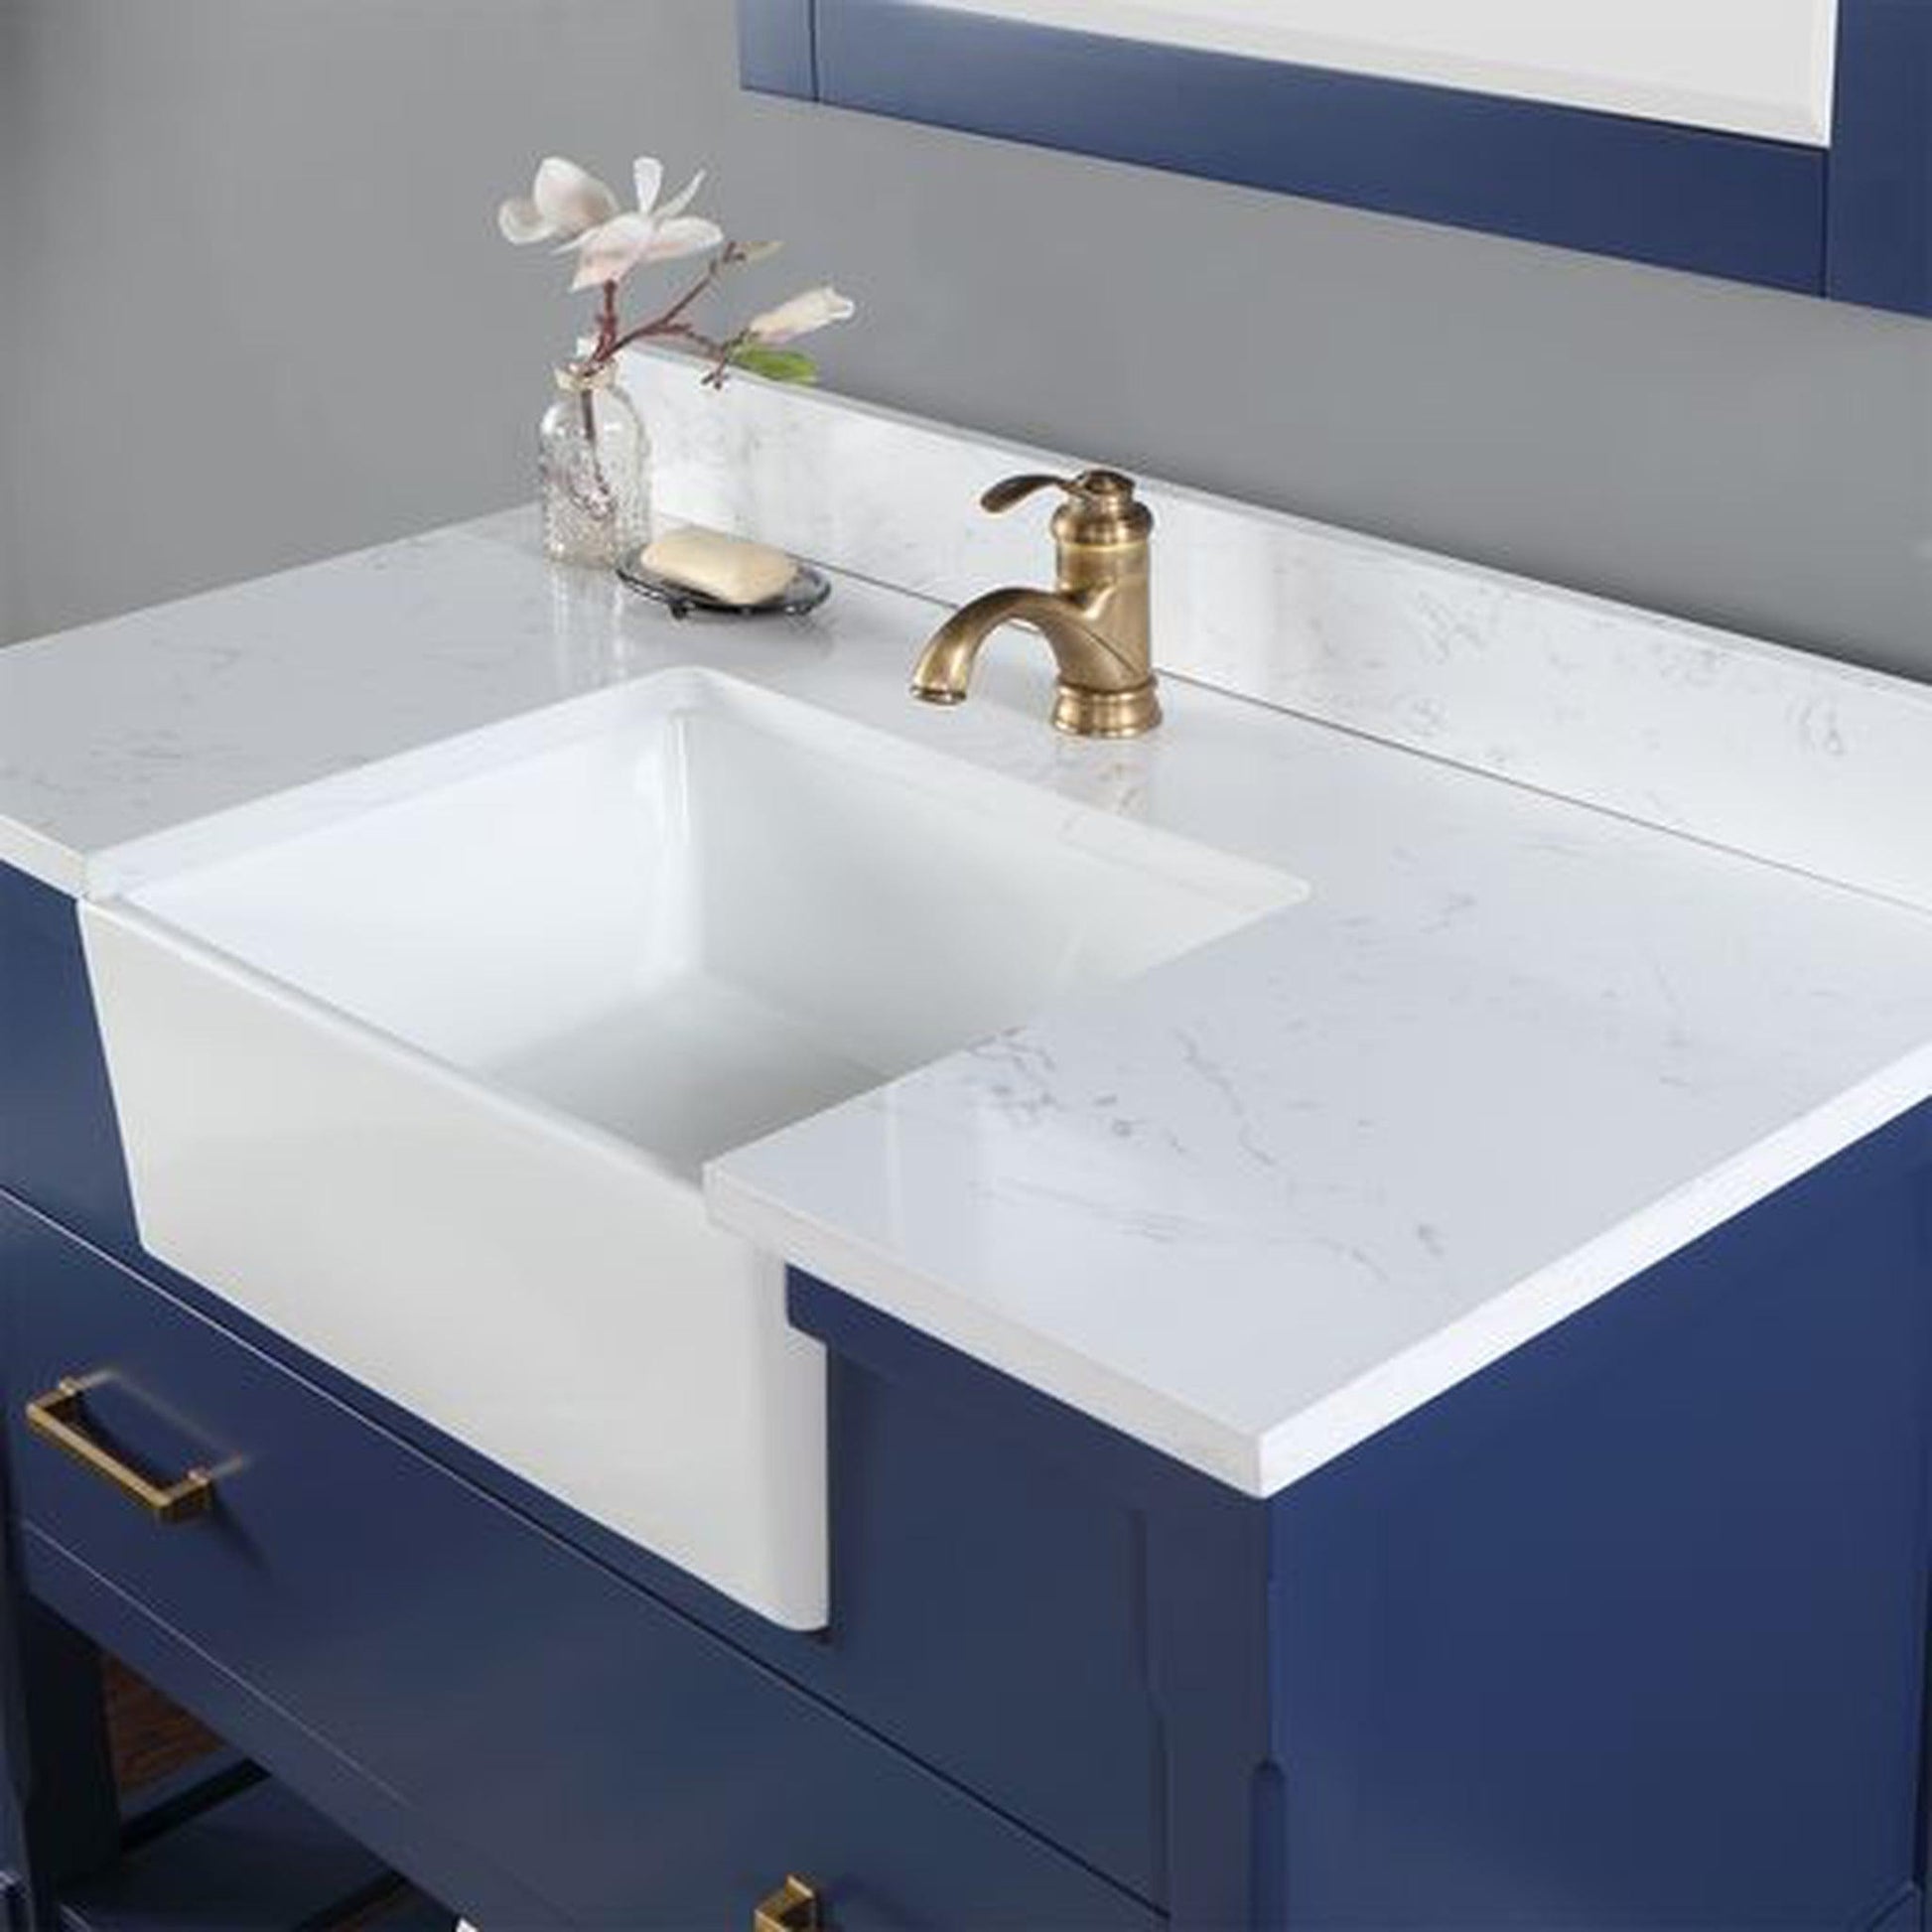 Altair Georgia 42" Single Jewelry Blue Freestanding Bathroom Vanity Set With Mirror, Aosta White Composite Stone Top, Rectangular Farmhouse Sink, and Backsplash